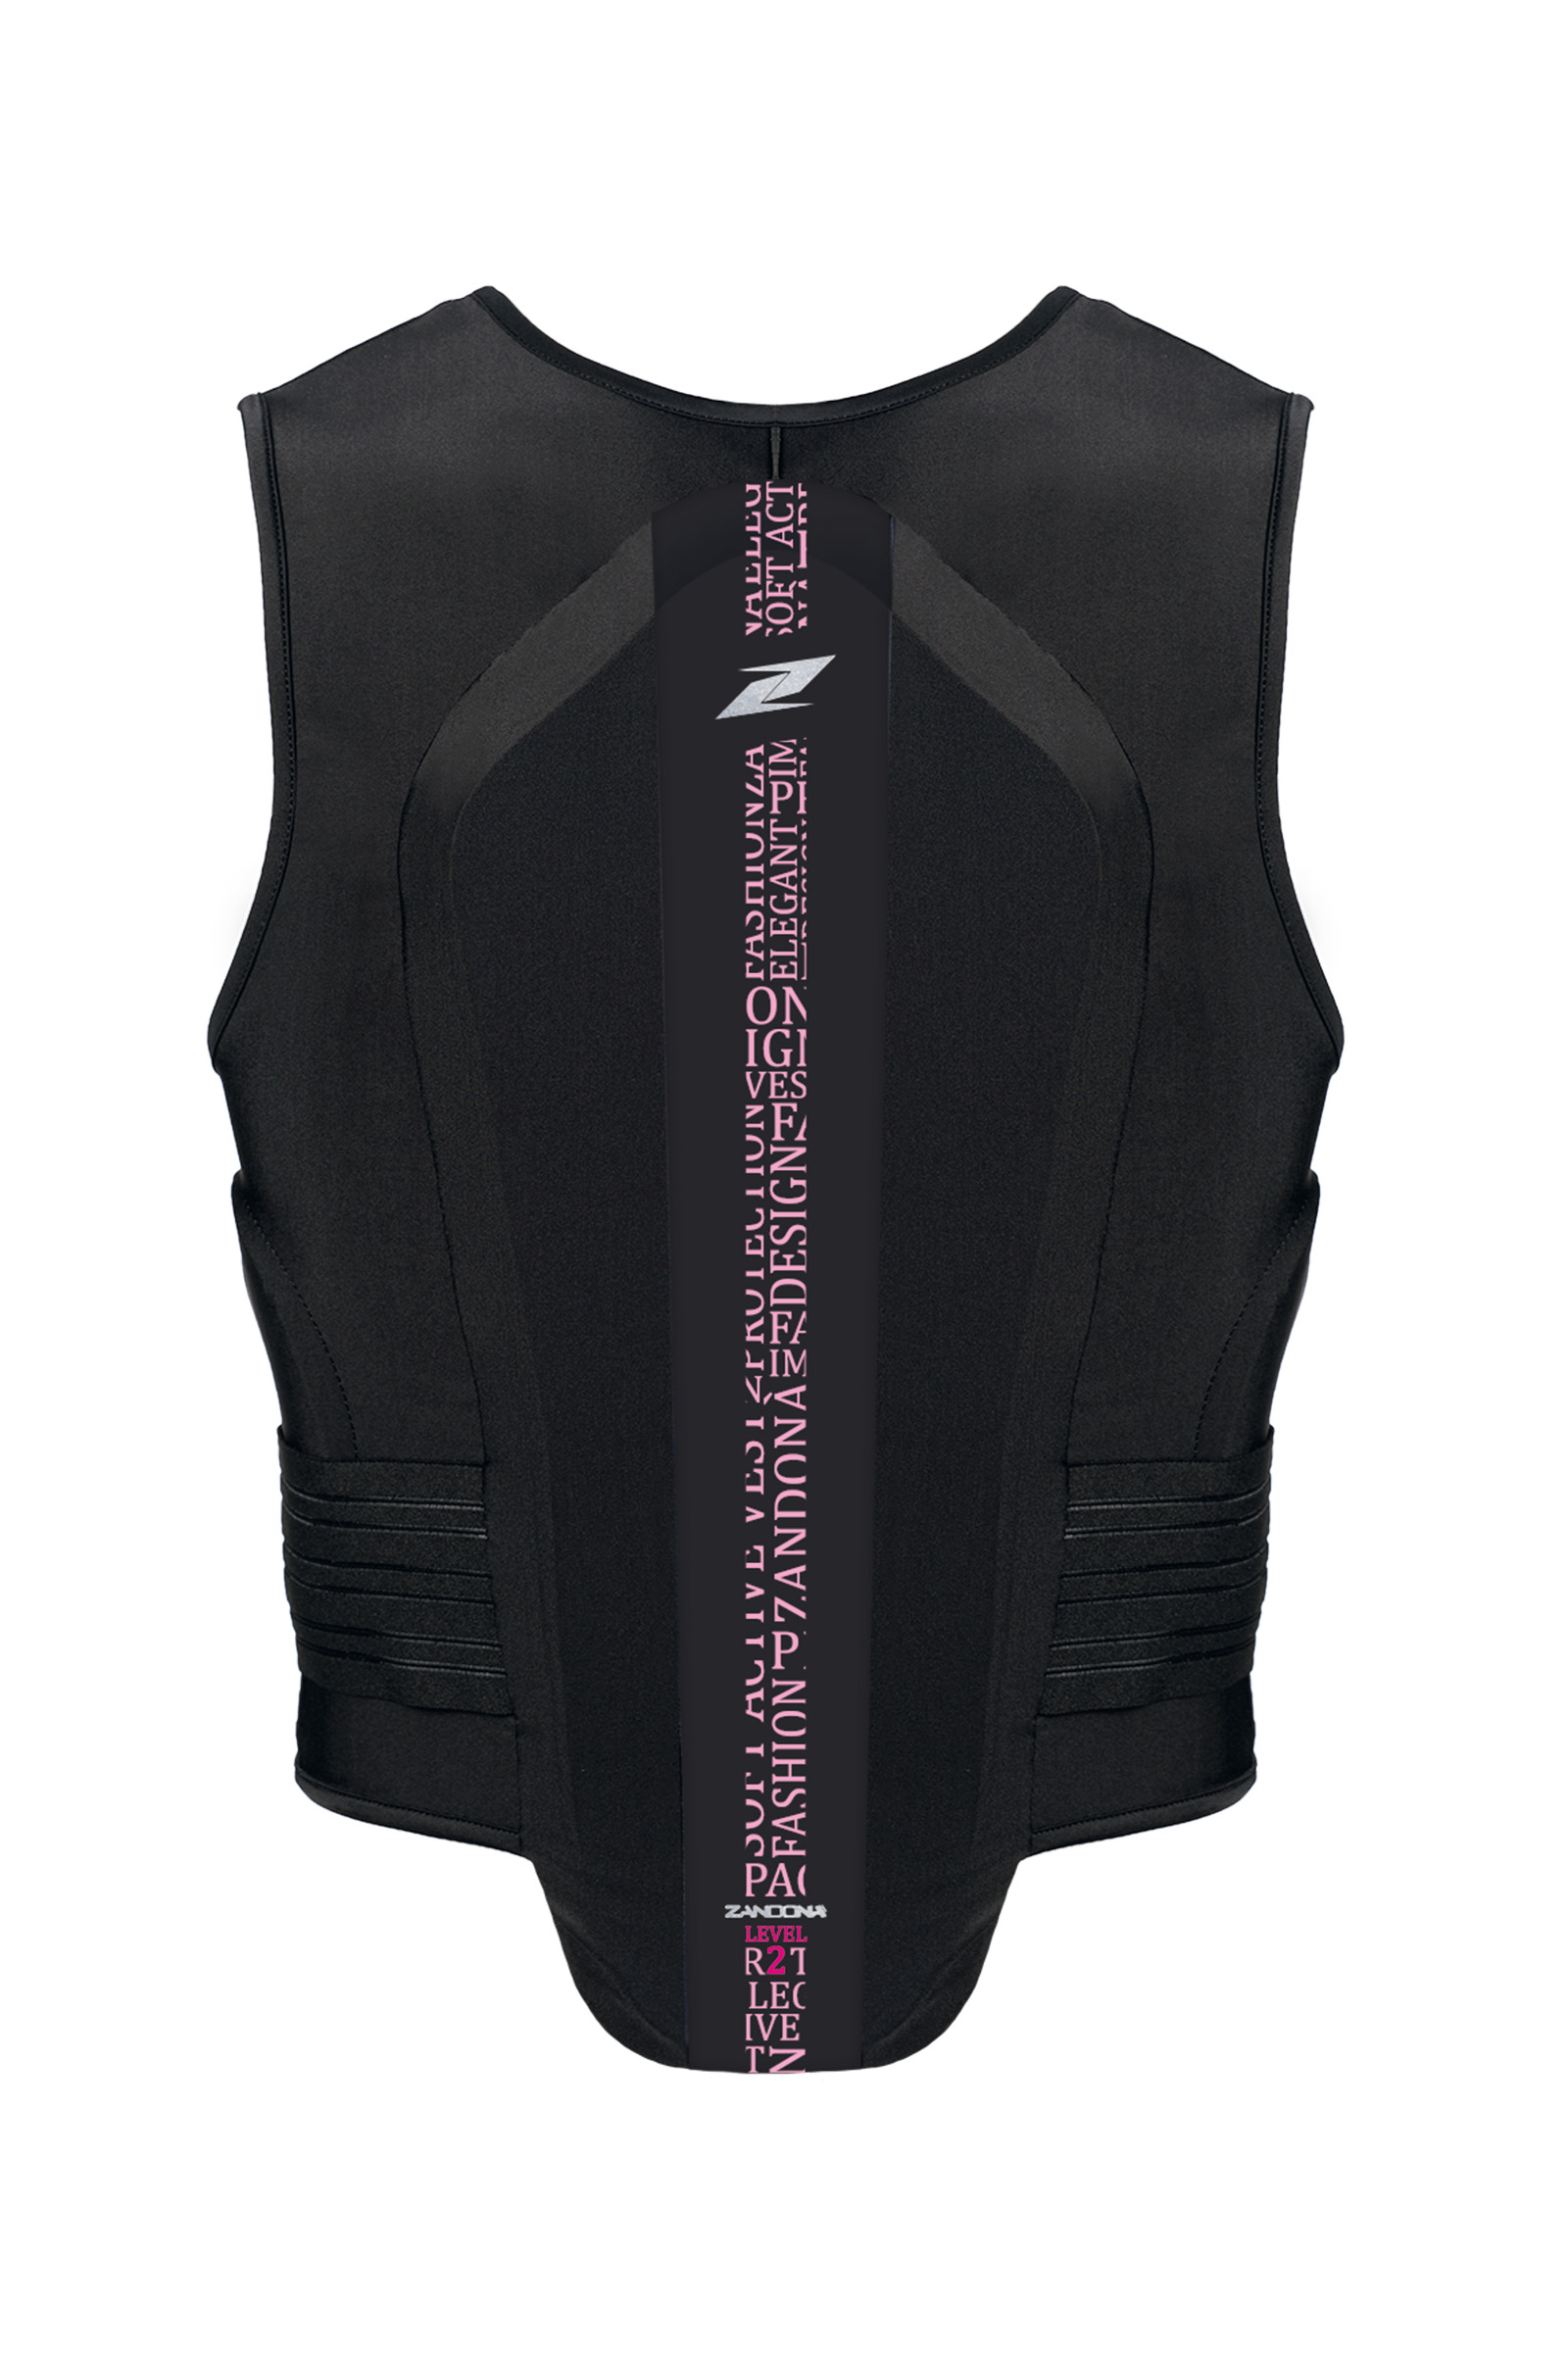 Back Protector x6 Vest Zandona Pro Soft (158-167cm) Buy